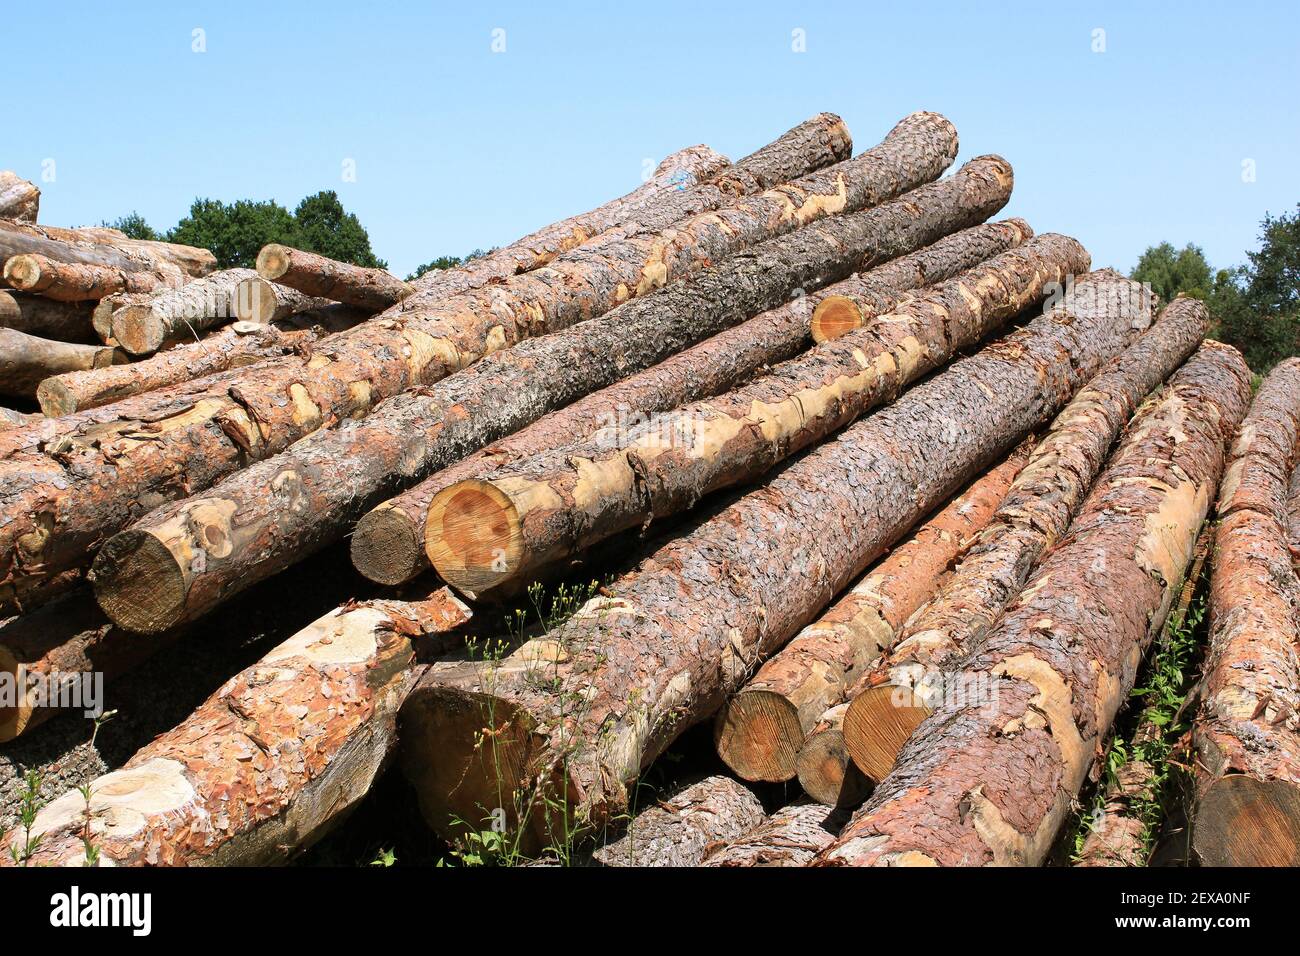 Tree trunks Stock Photo